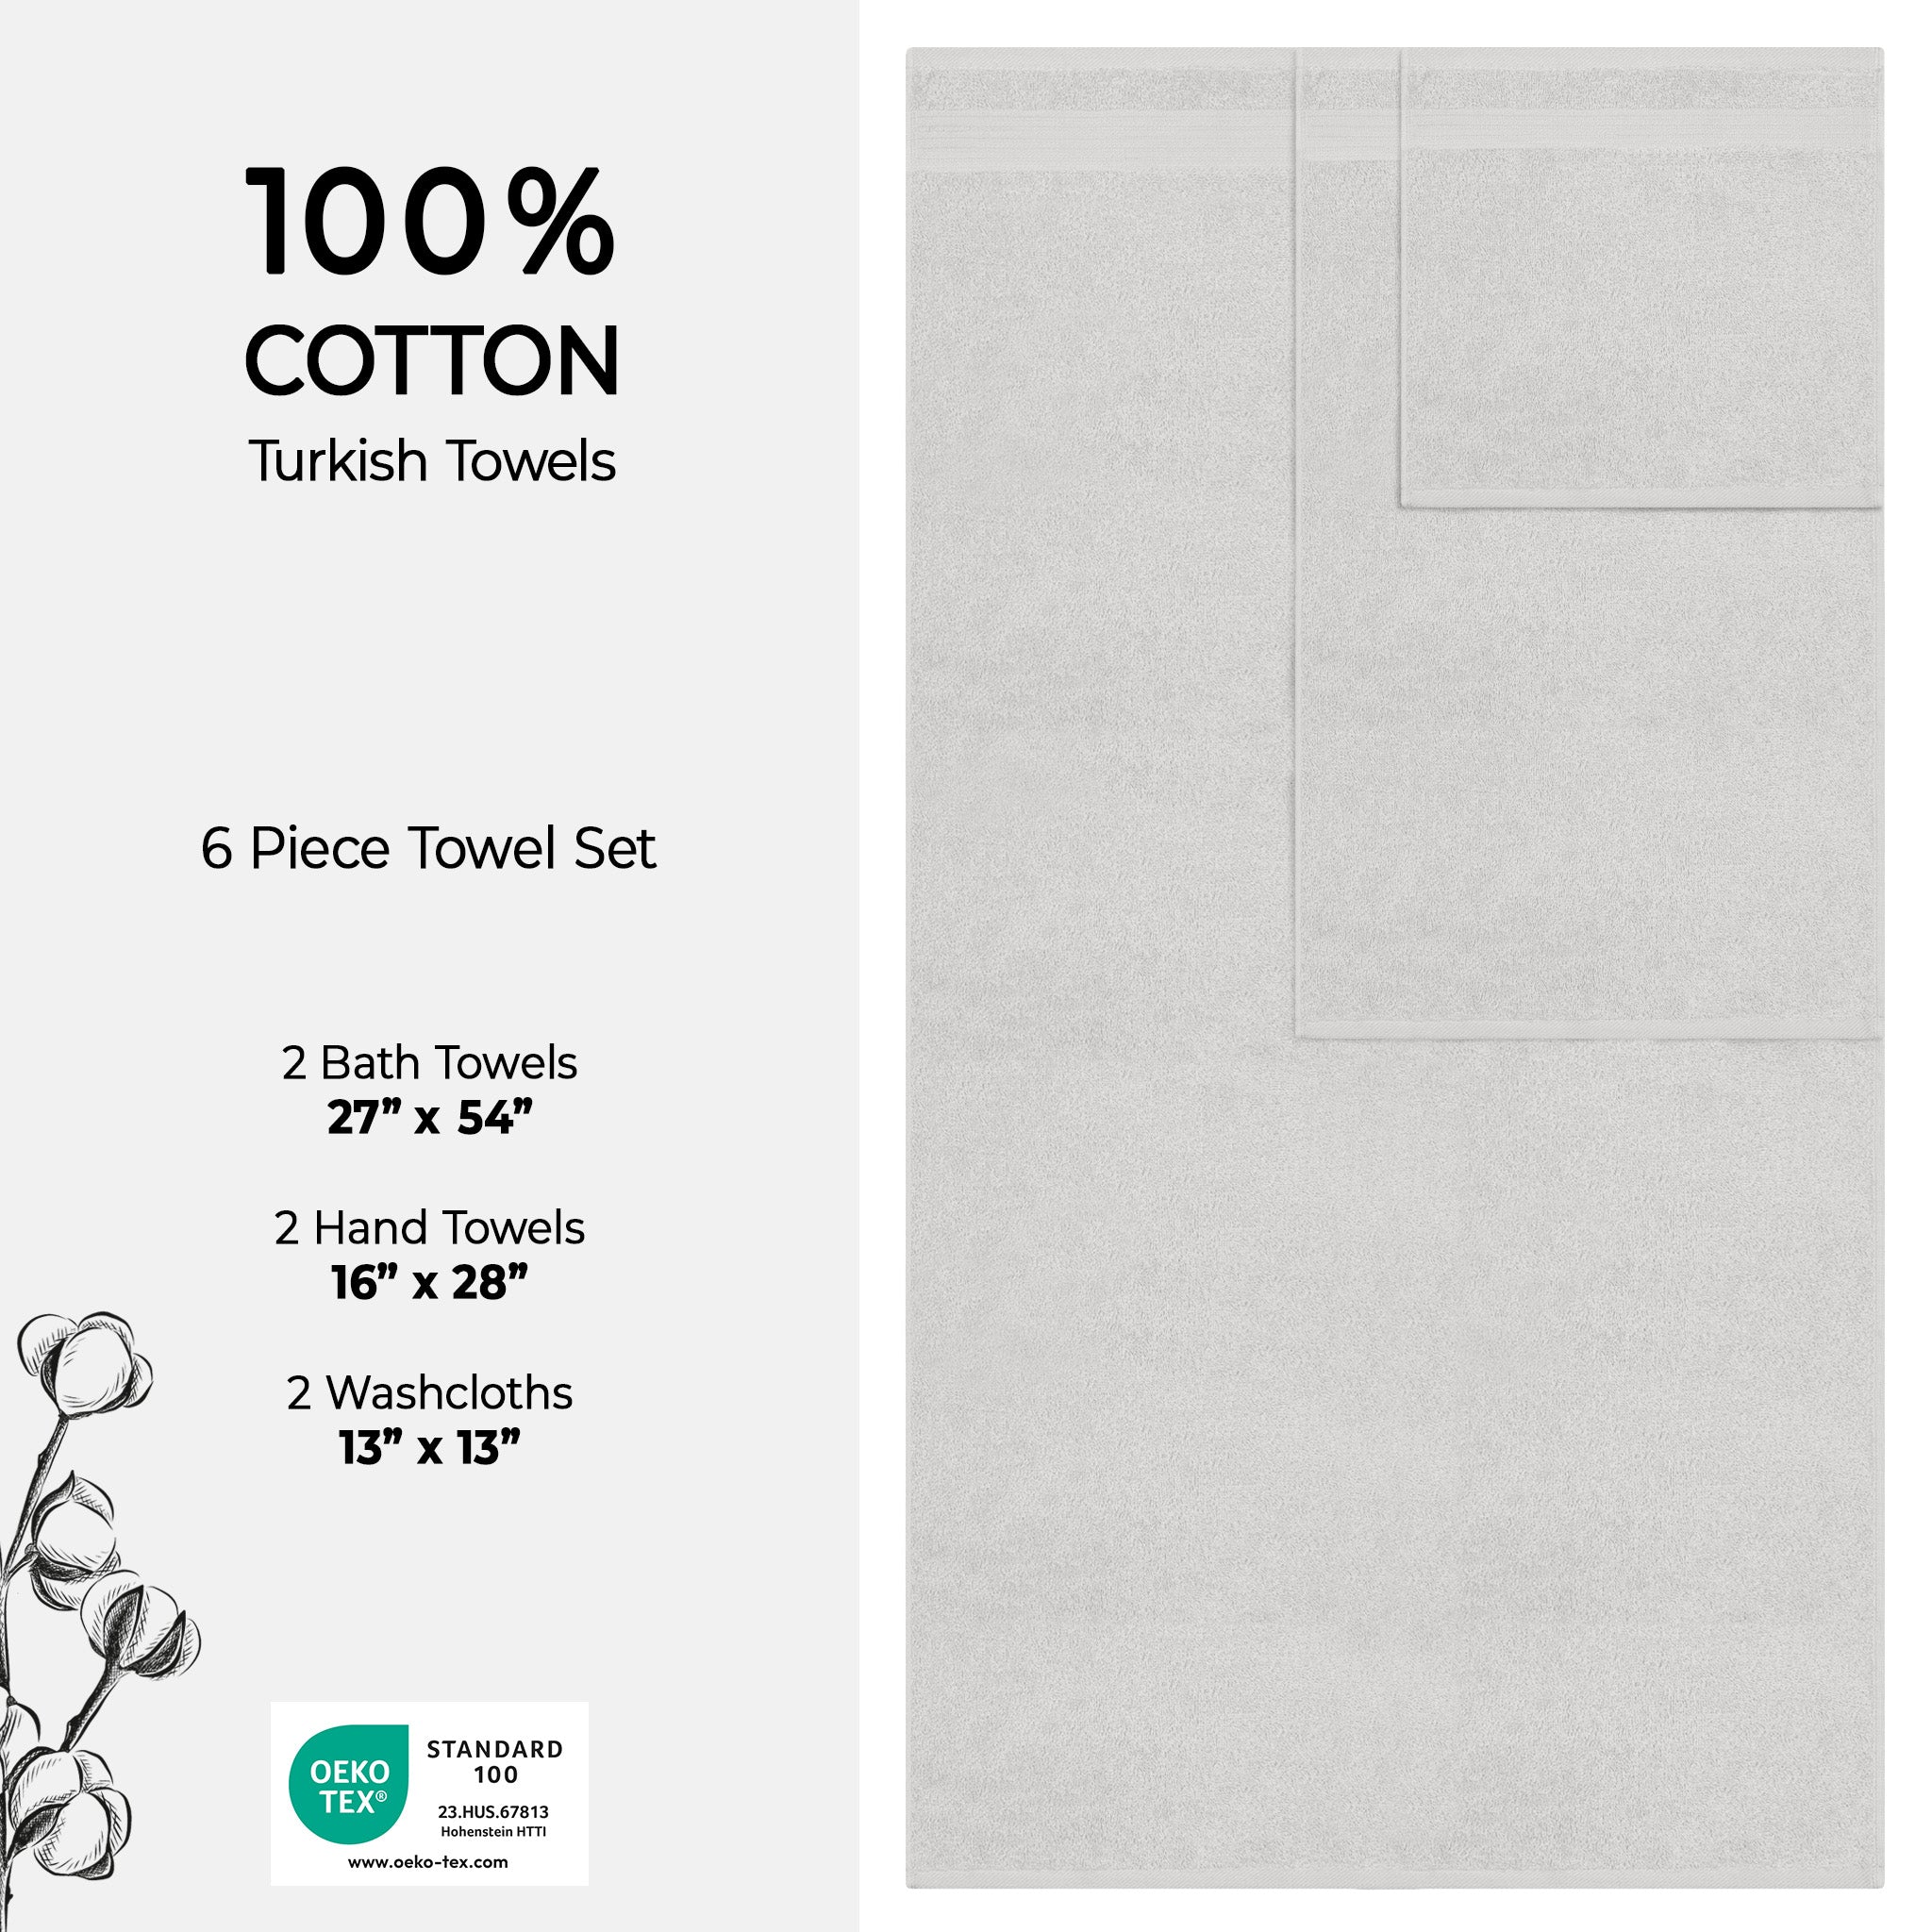 American Soft Linen Bekos 100% Cotton Turkish Towels 6 Piece Bath Towel Set -silver-gray-04